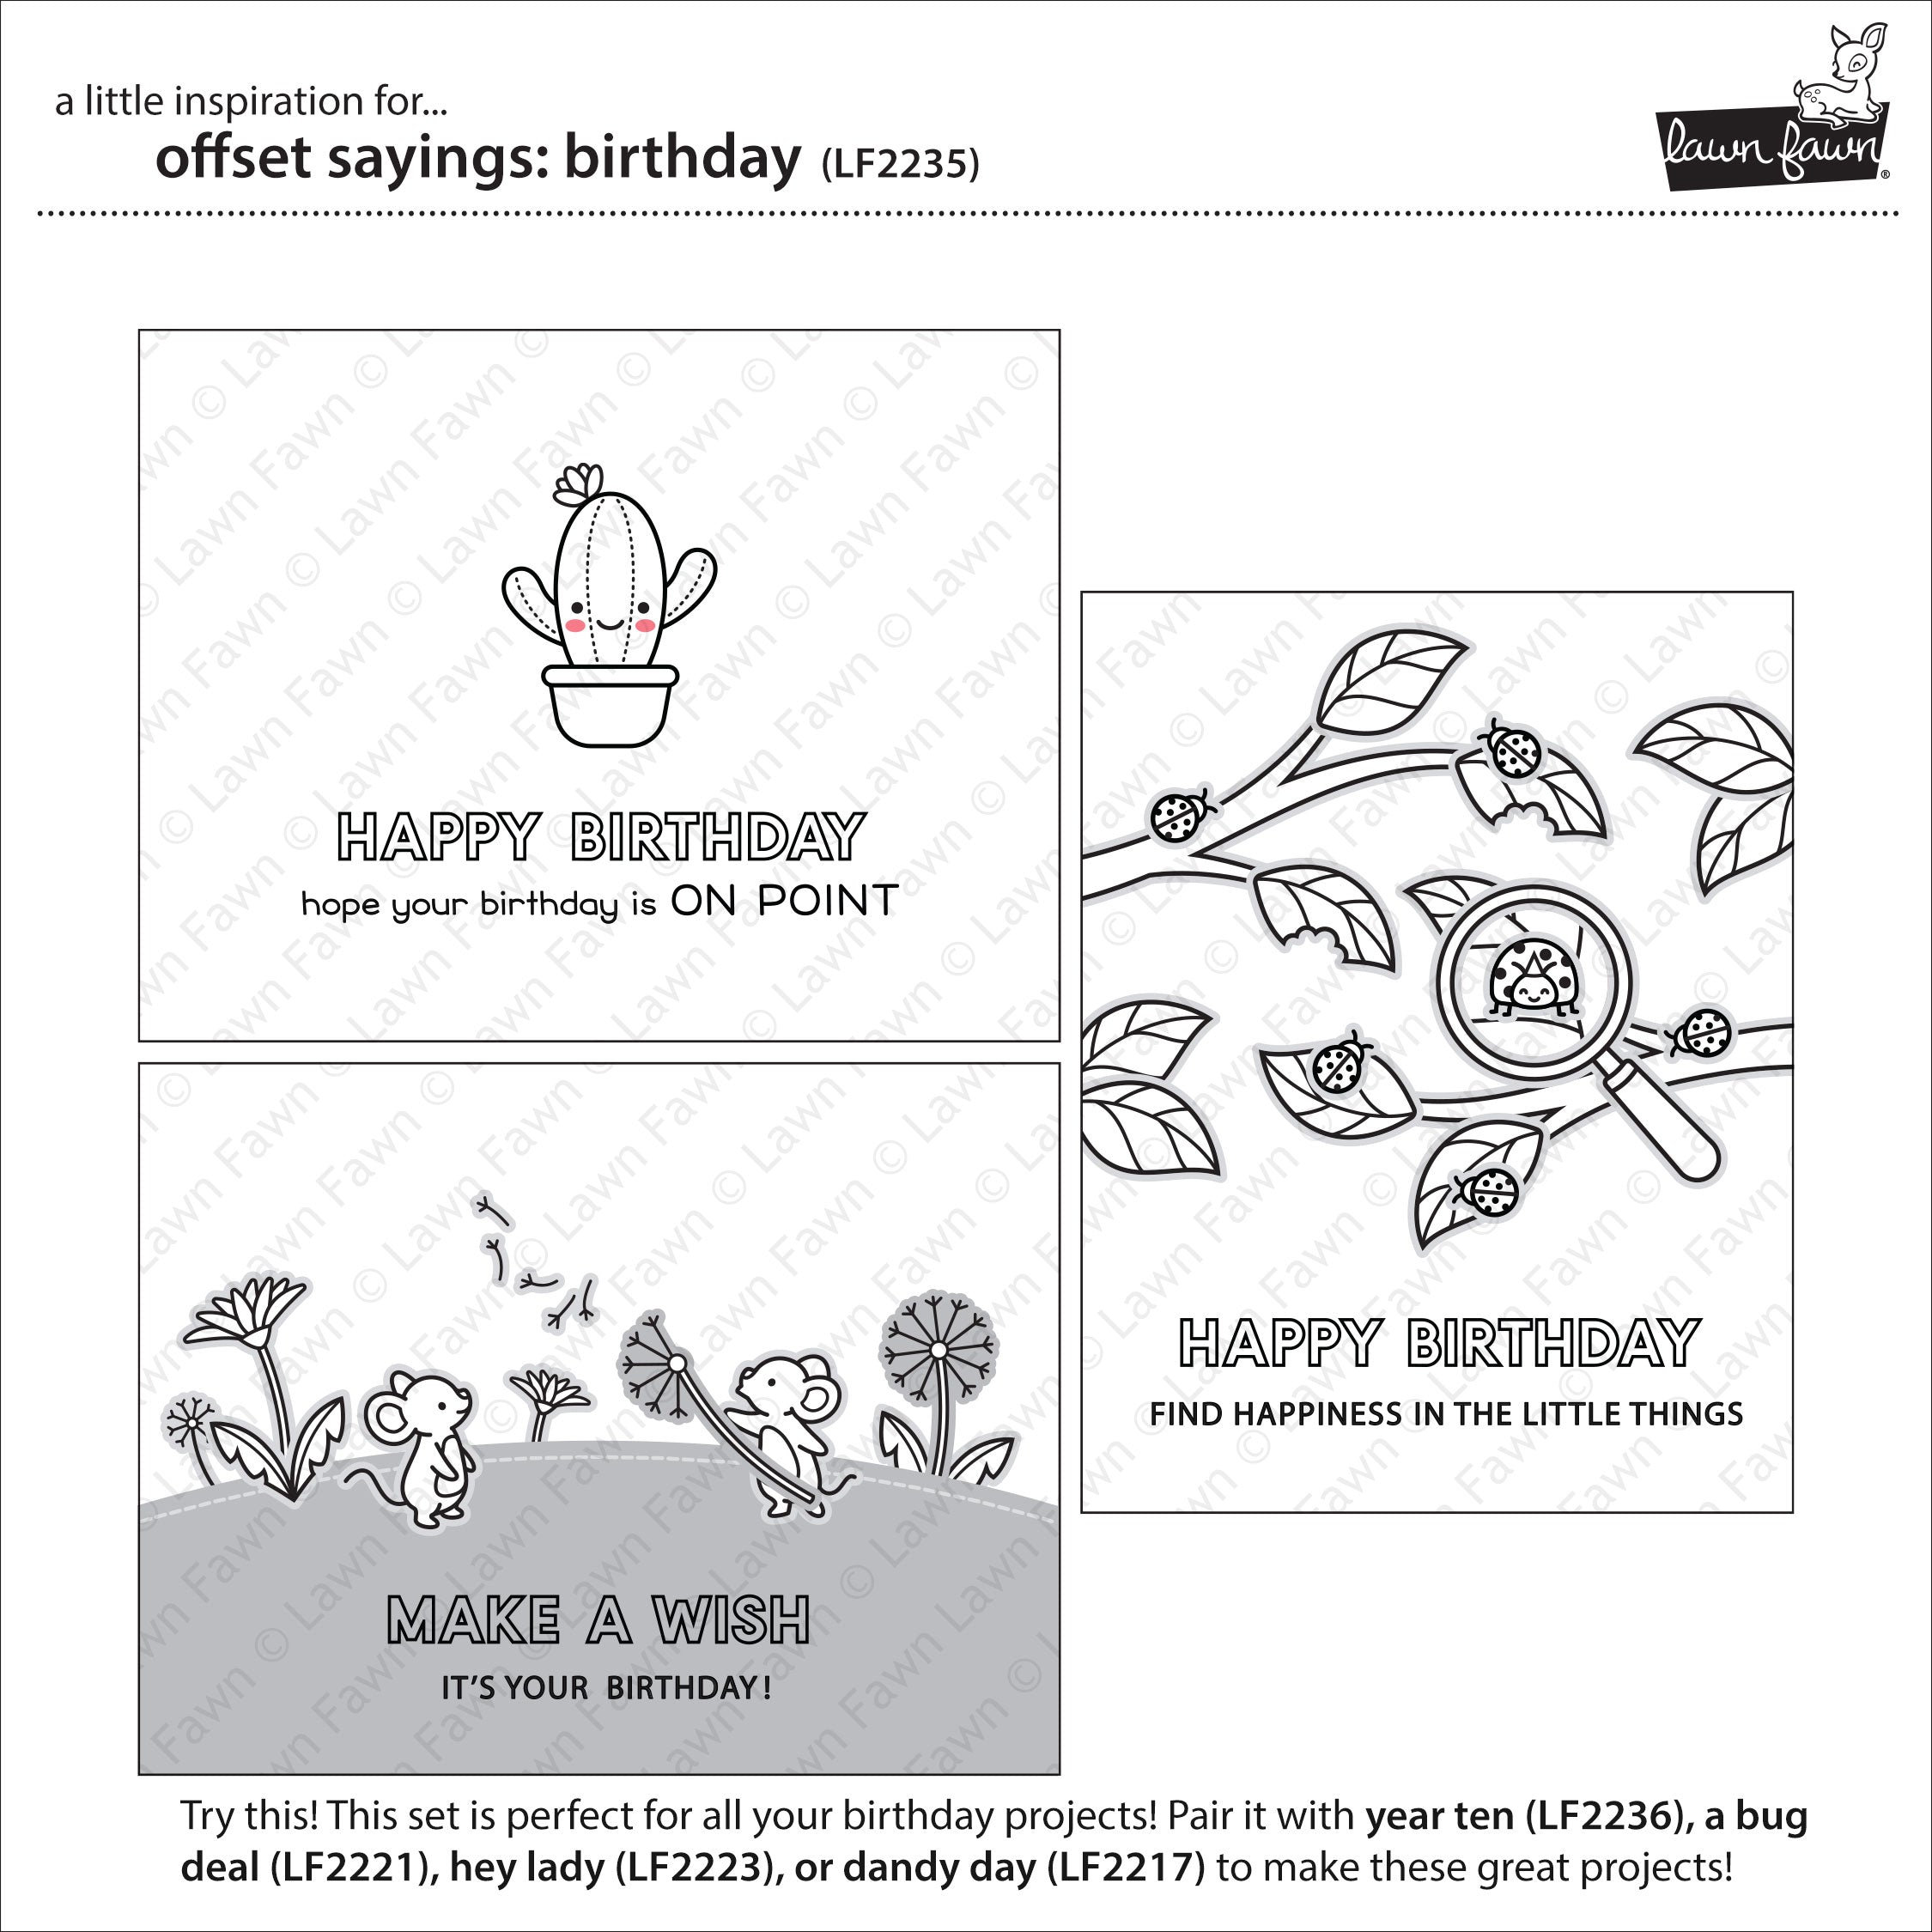 offset sayings: birthday